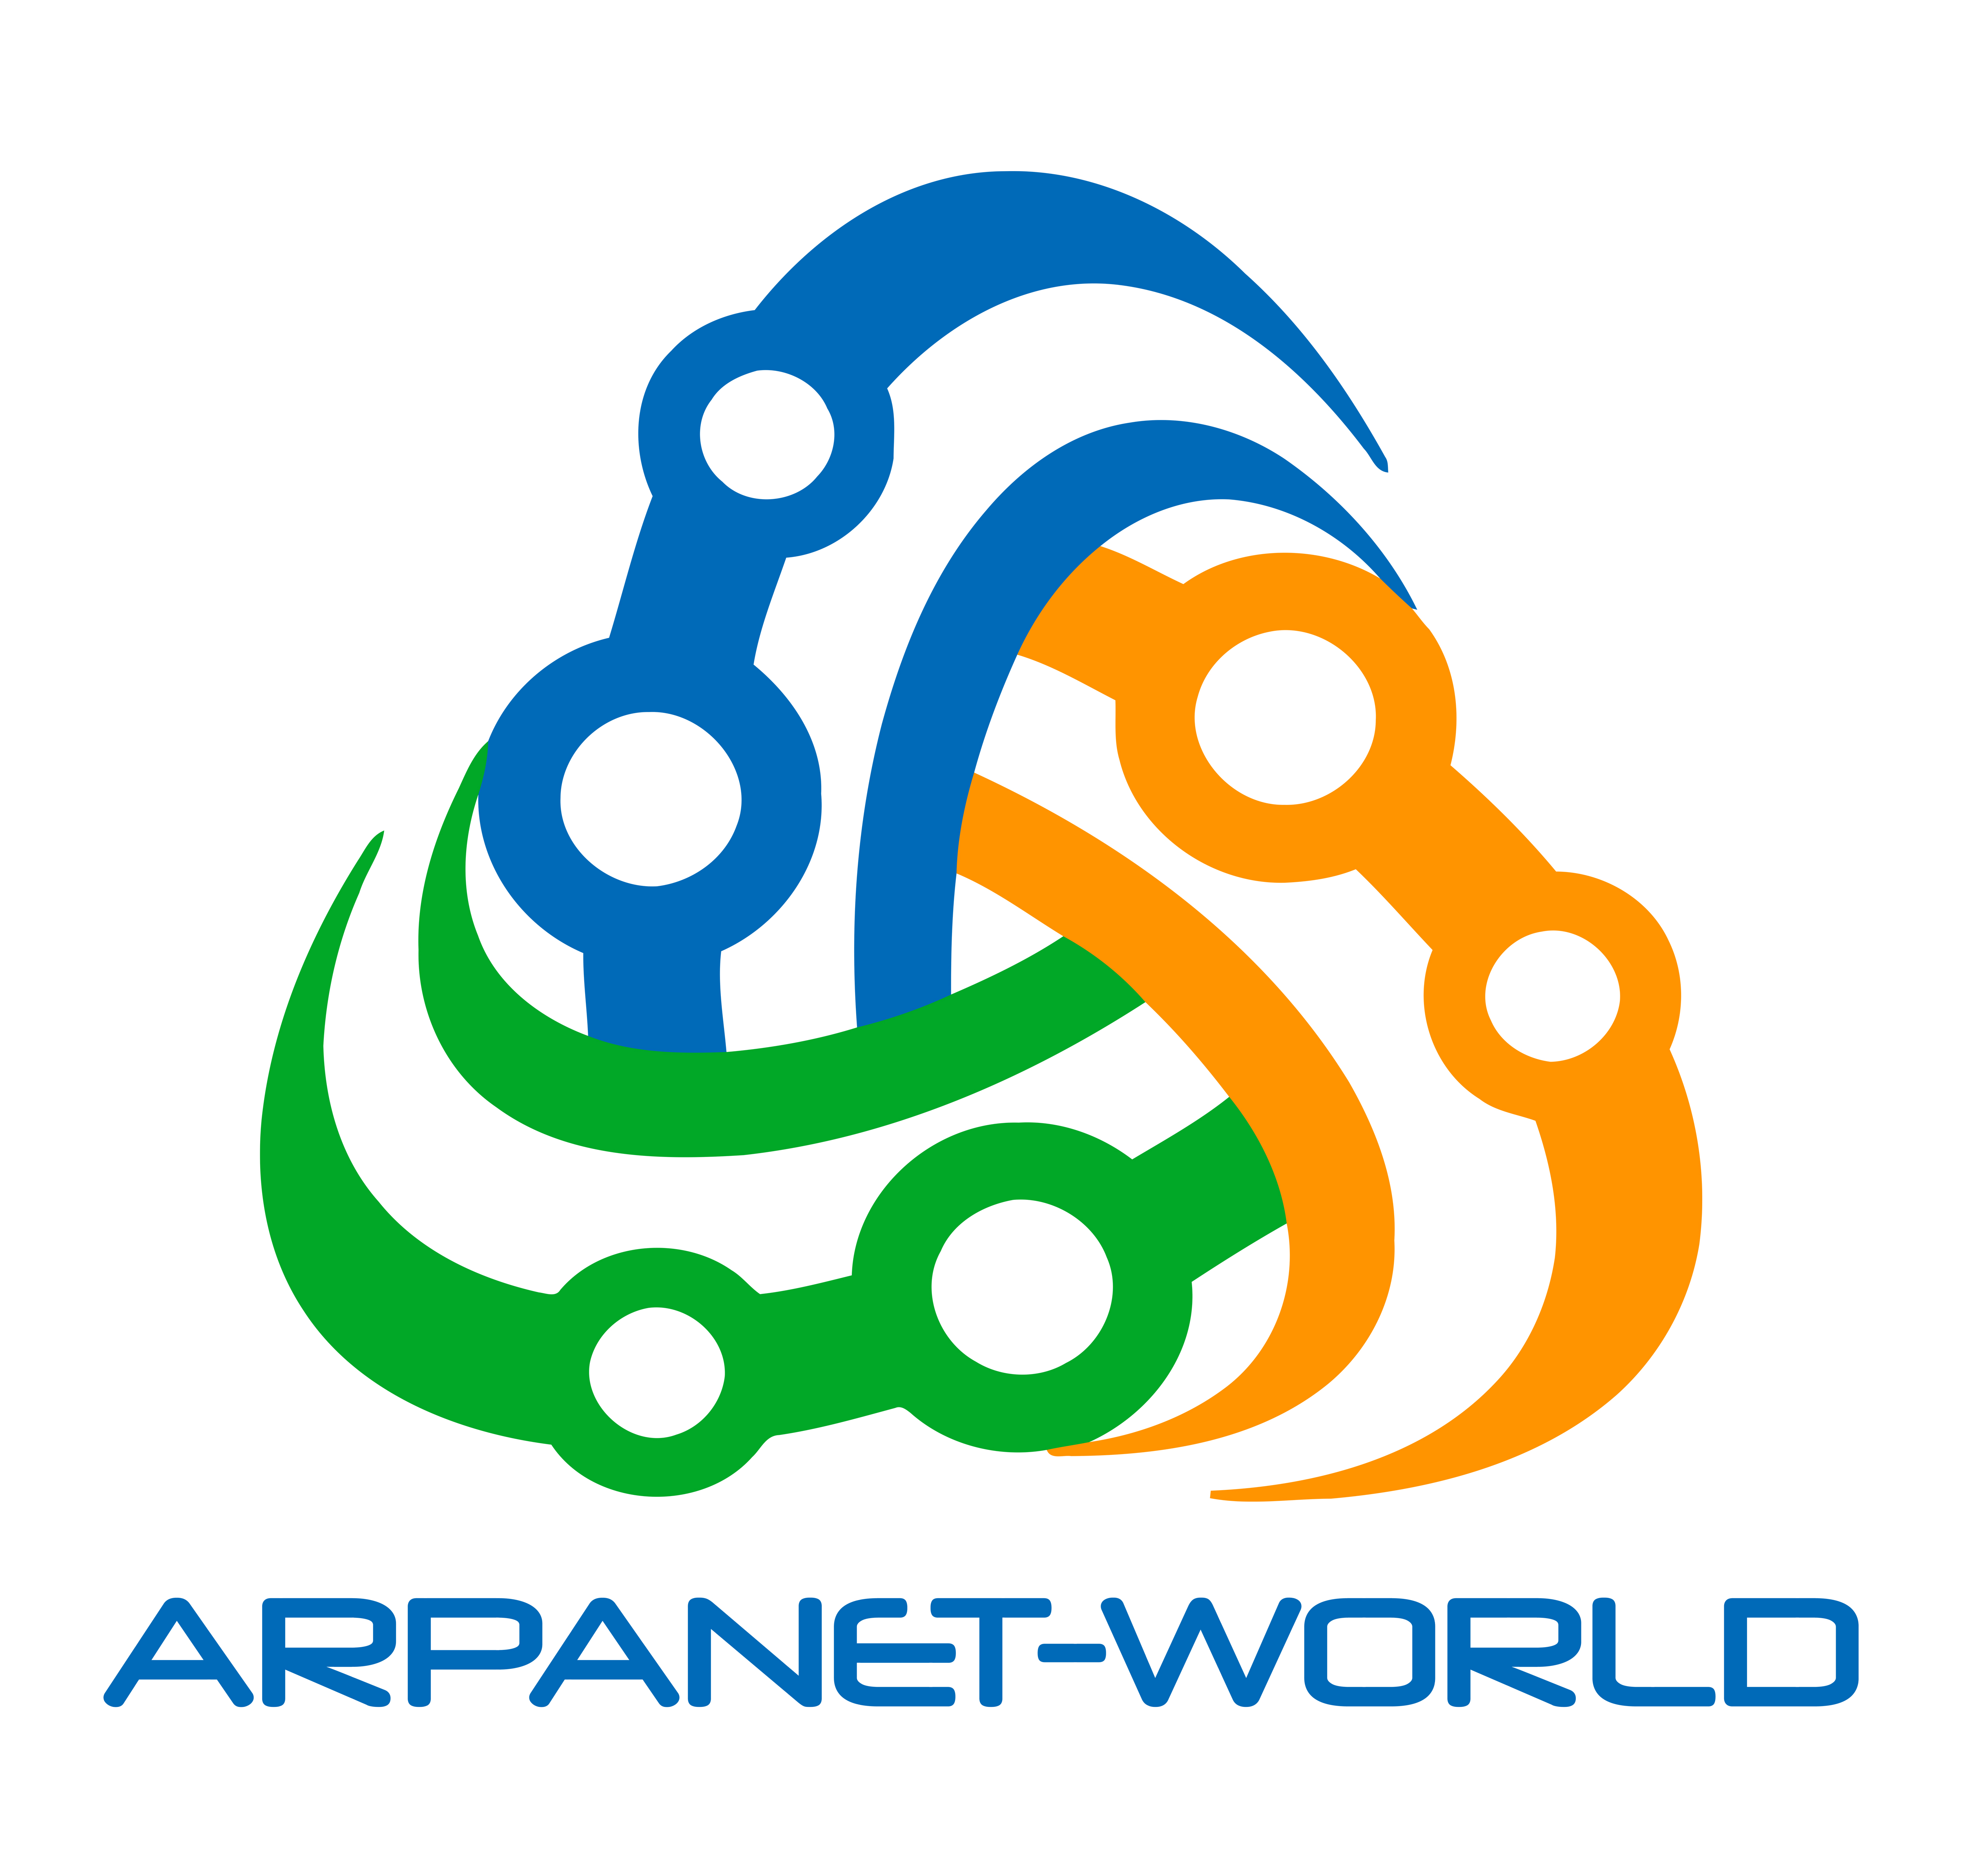 Arpanet-World